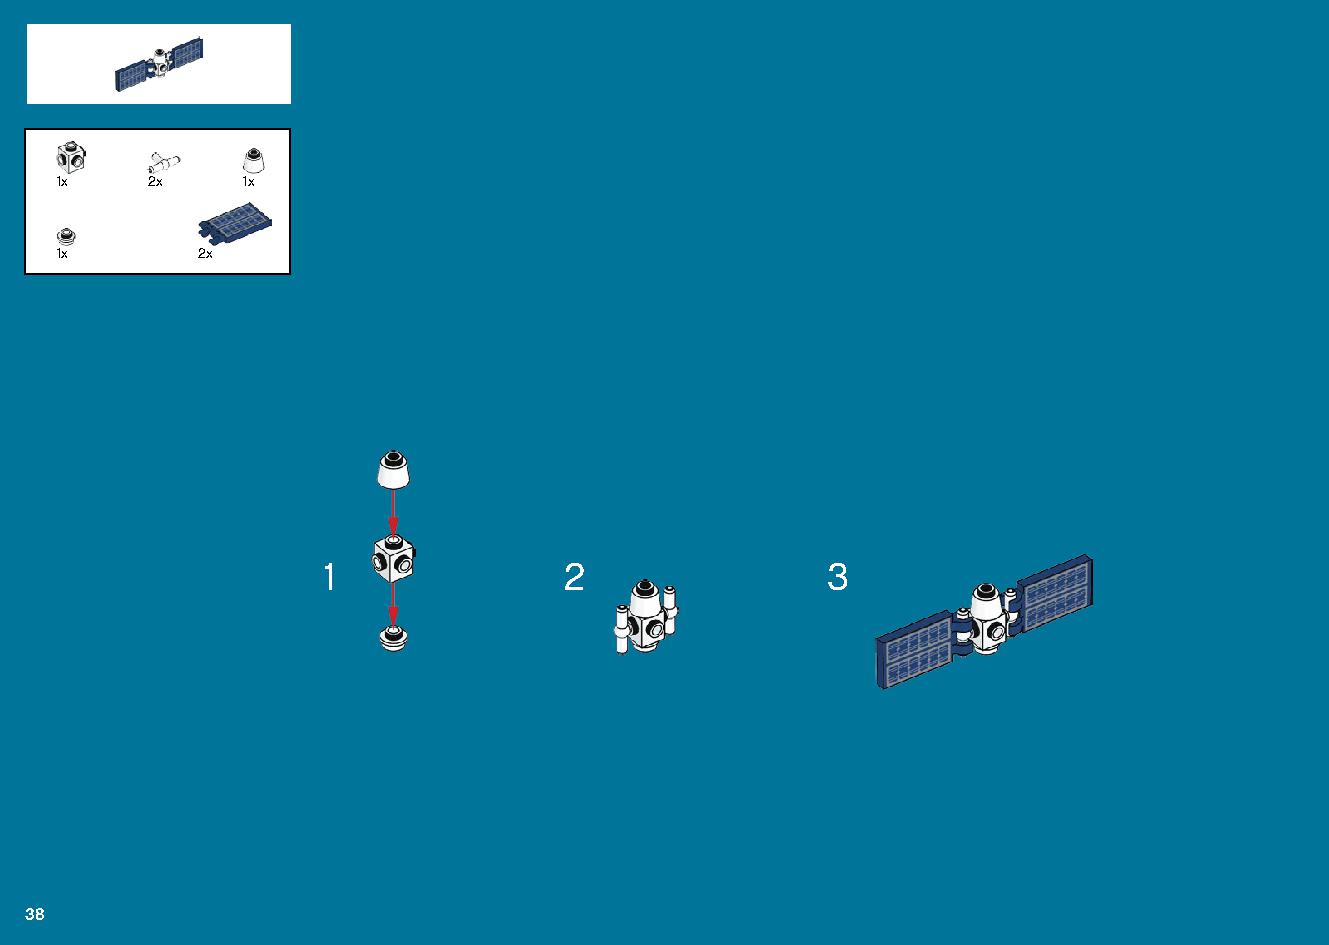 International Space Station 21321 レゴの商品情報 レゴの説明書・組立方法 38 page